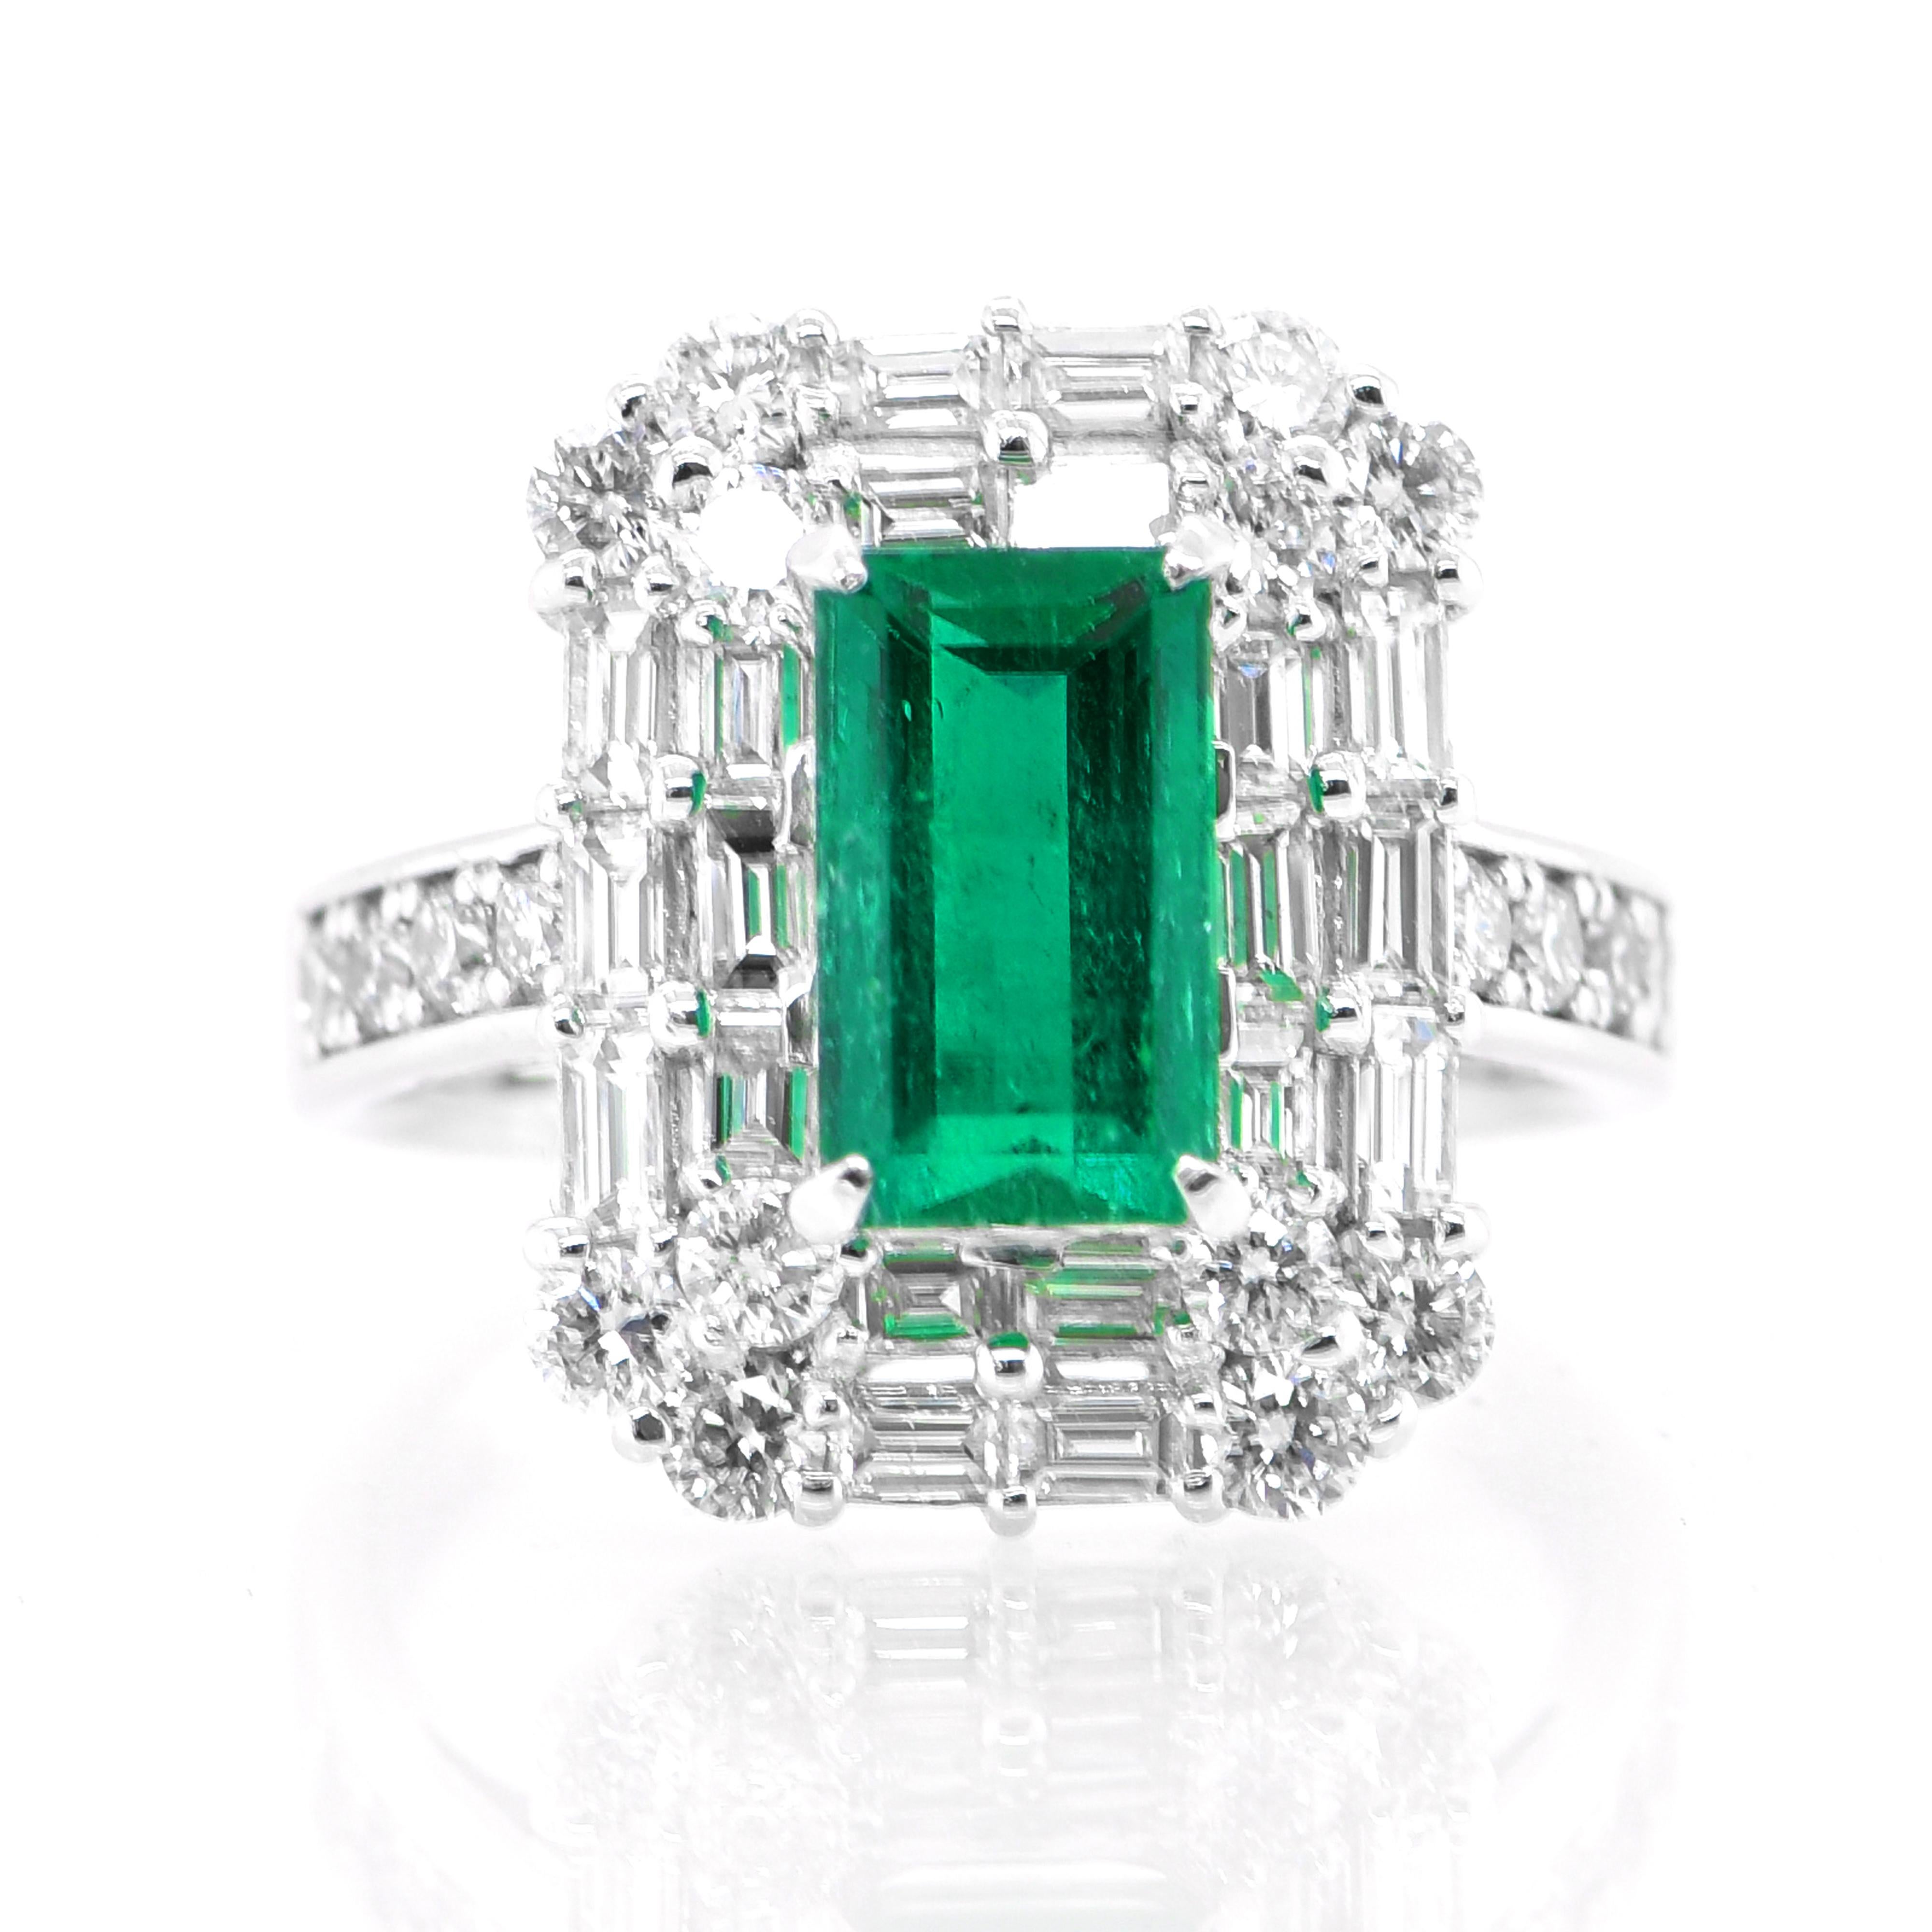 1.94 Carat Natural Emerald and Diamond Art Deco Inspired Ring Set in Platinum